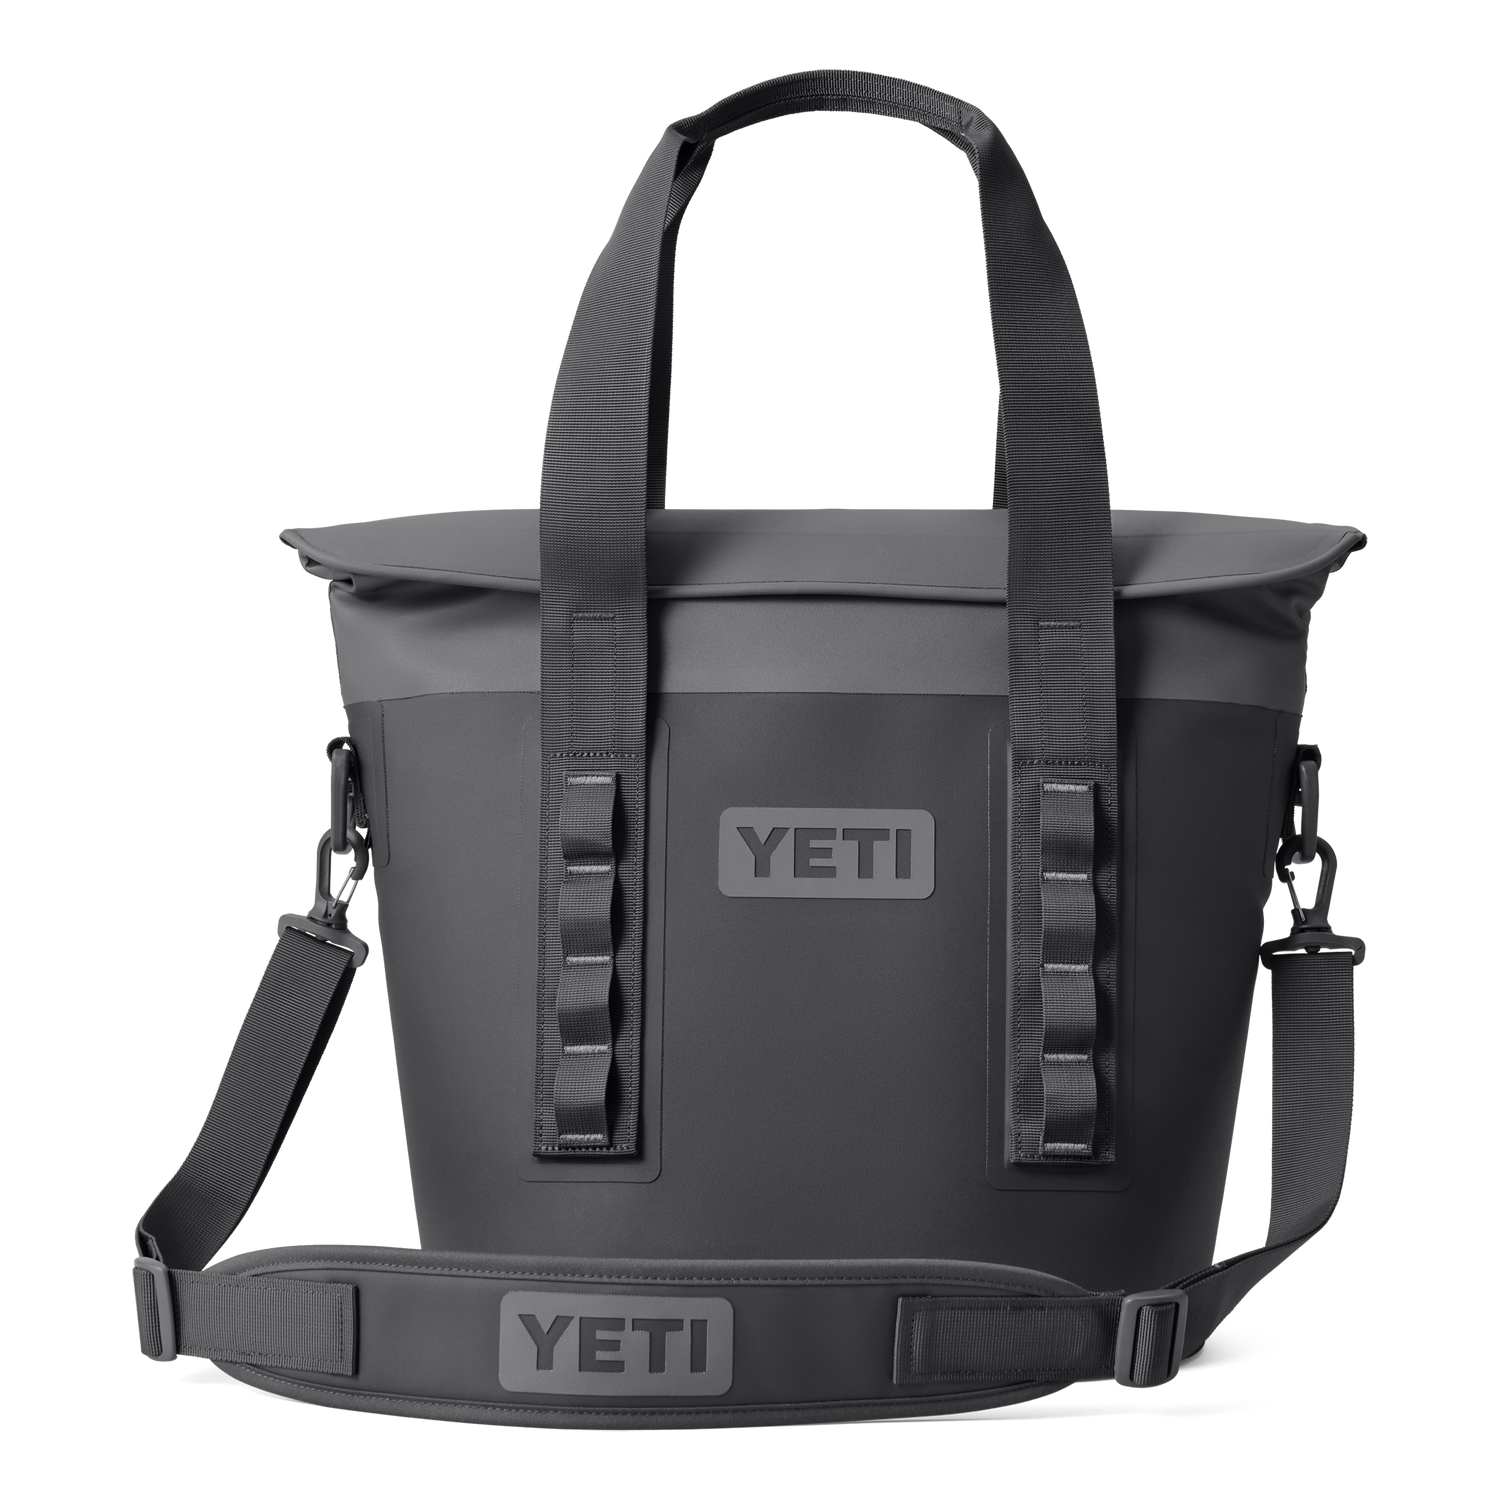 YETI Cool Bags And Backpacks – YETI EUROPE